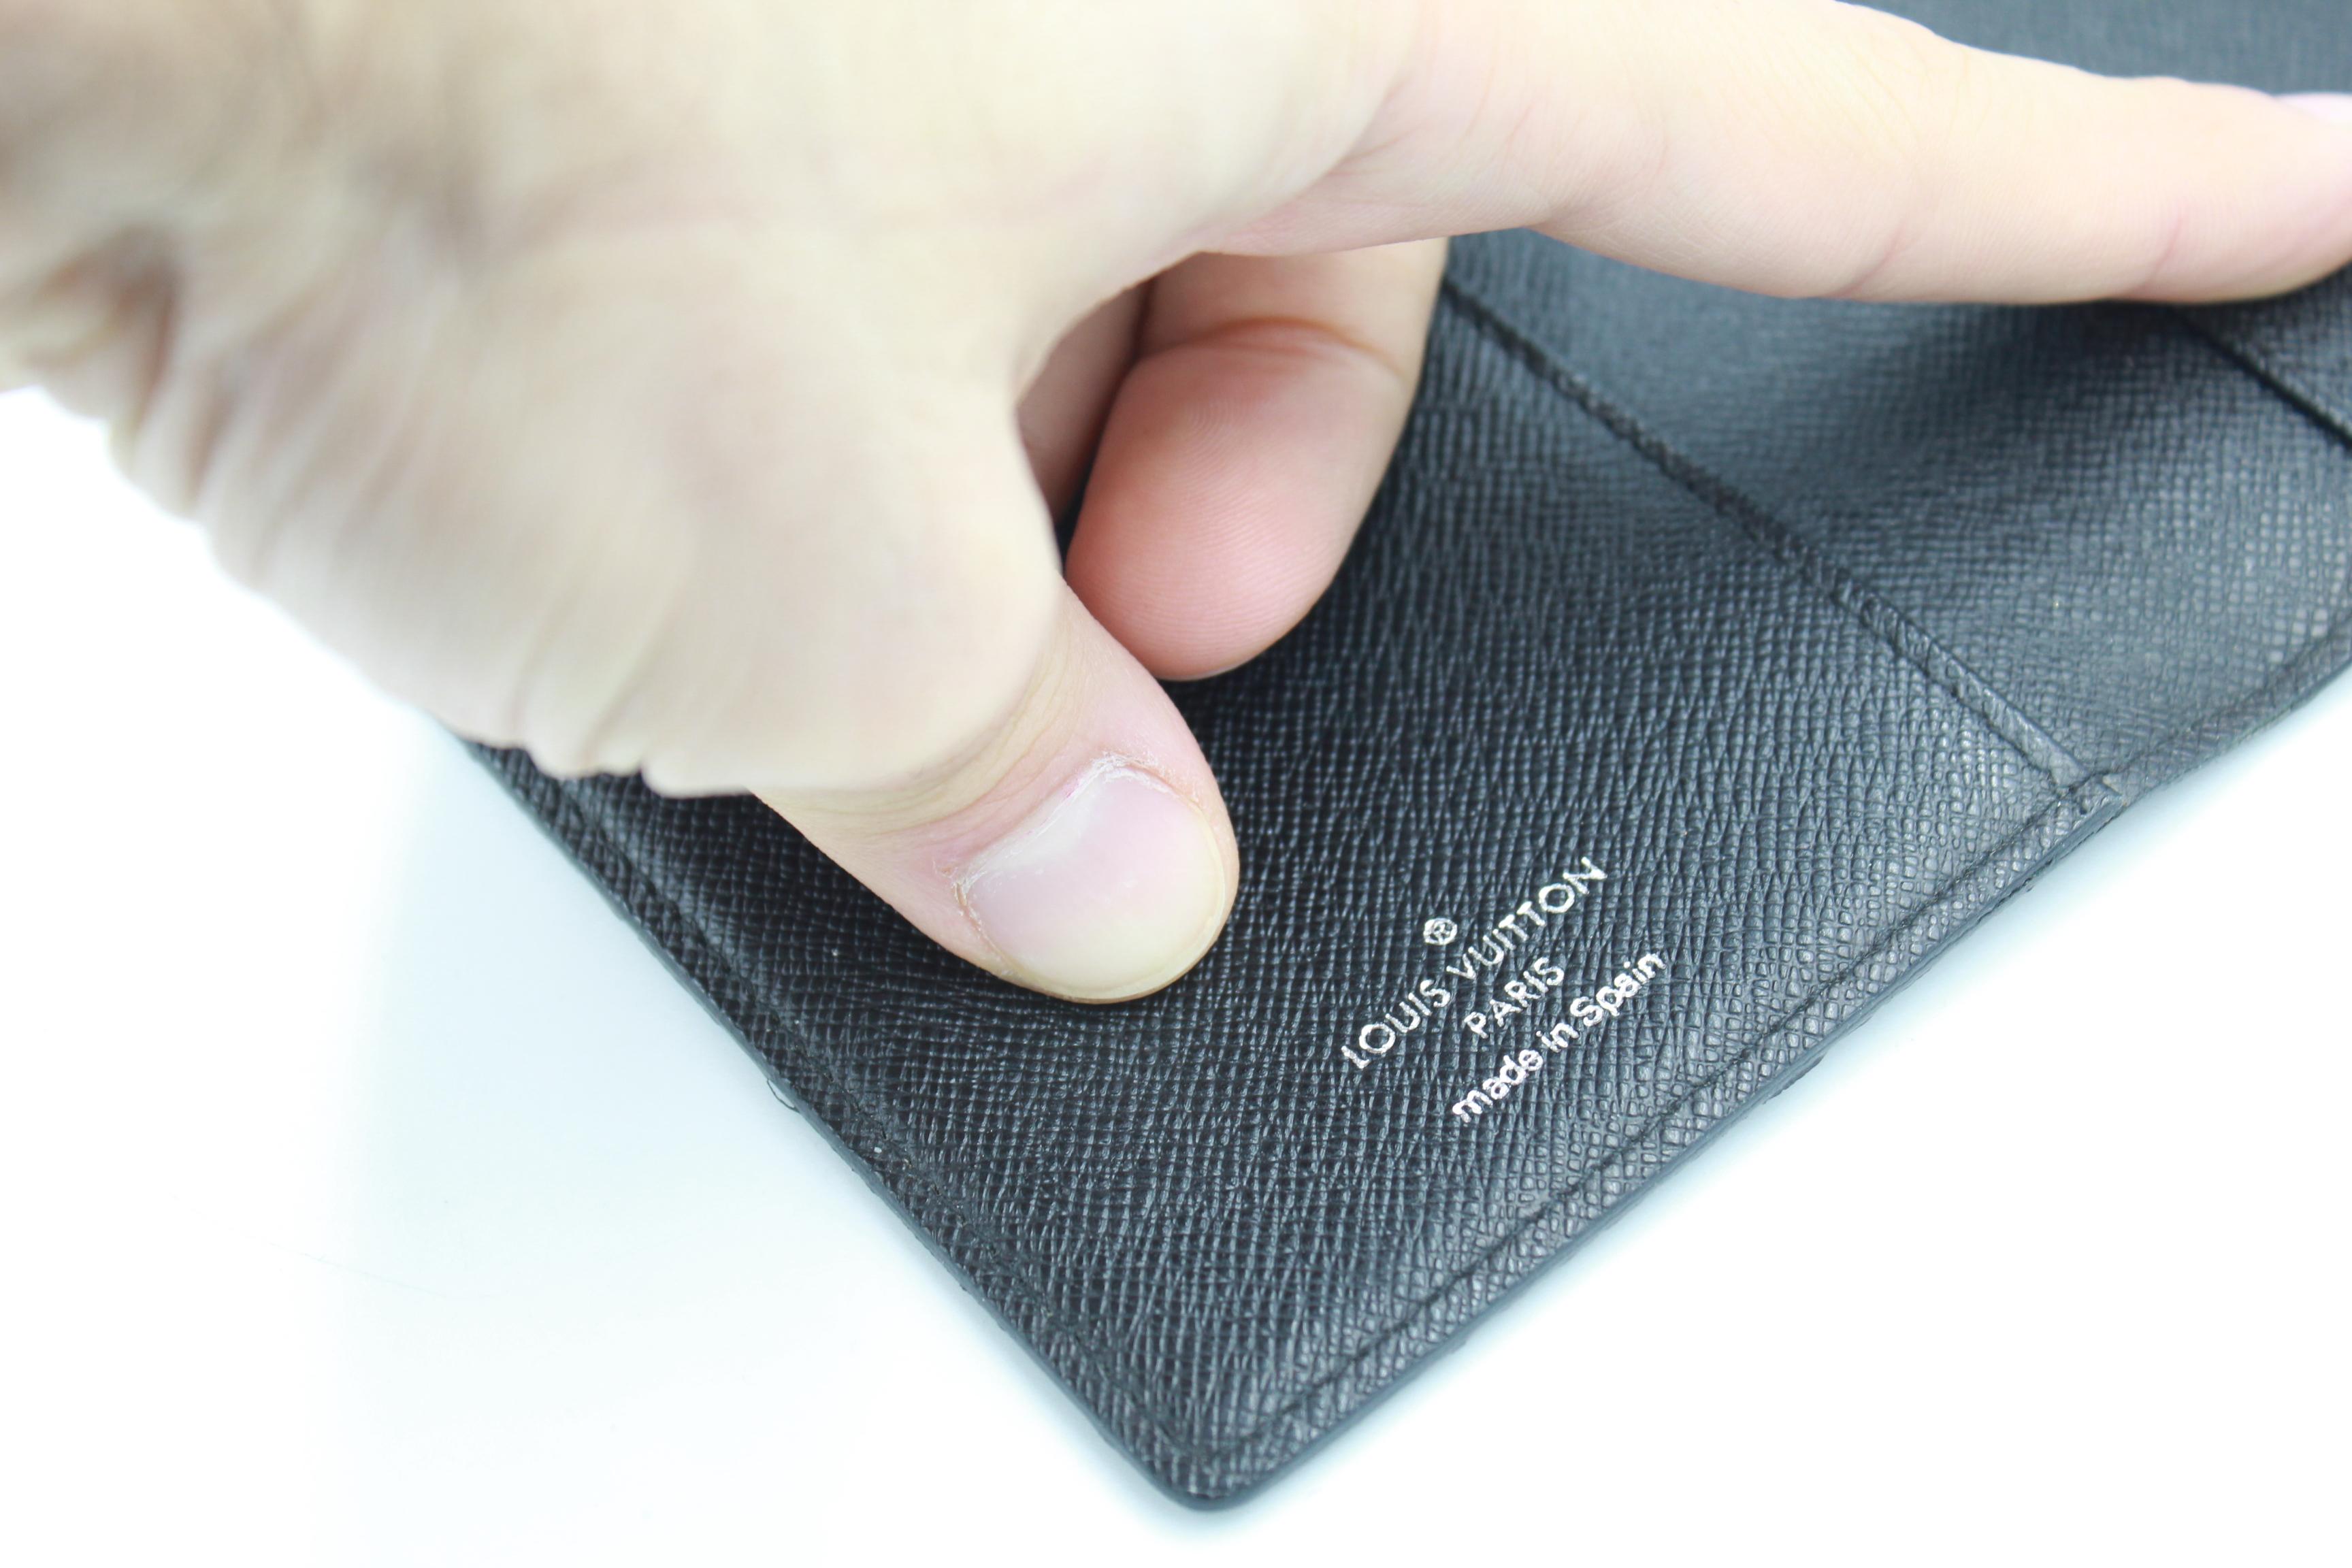 Louis Vuitton Double Wallet in damier monogram.
Card holder / Change purse.
Good condition.
Max size : 14cm x 11cm